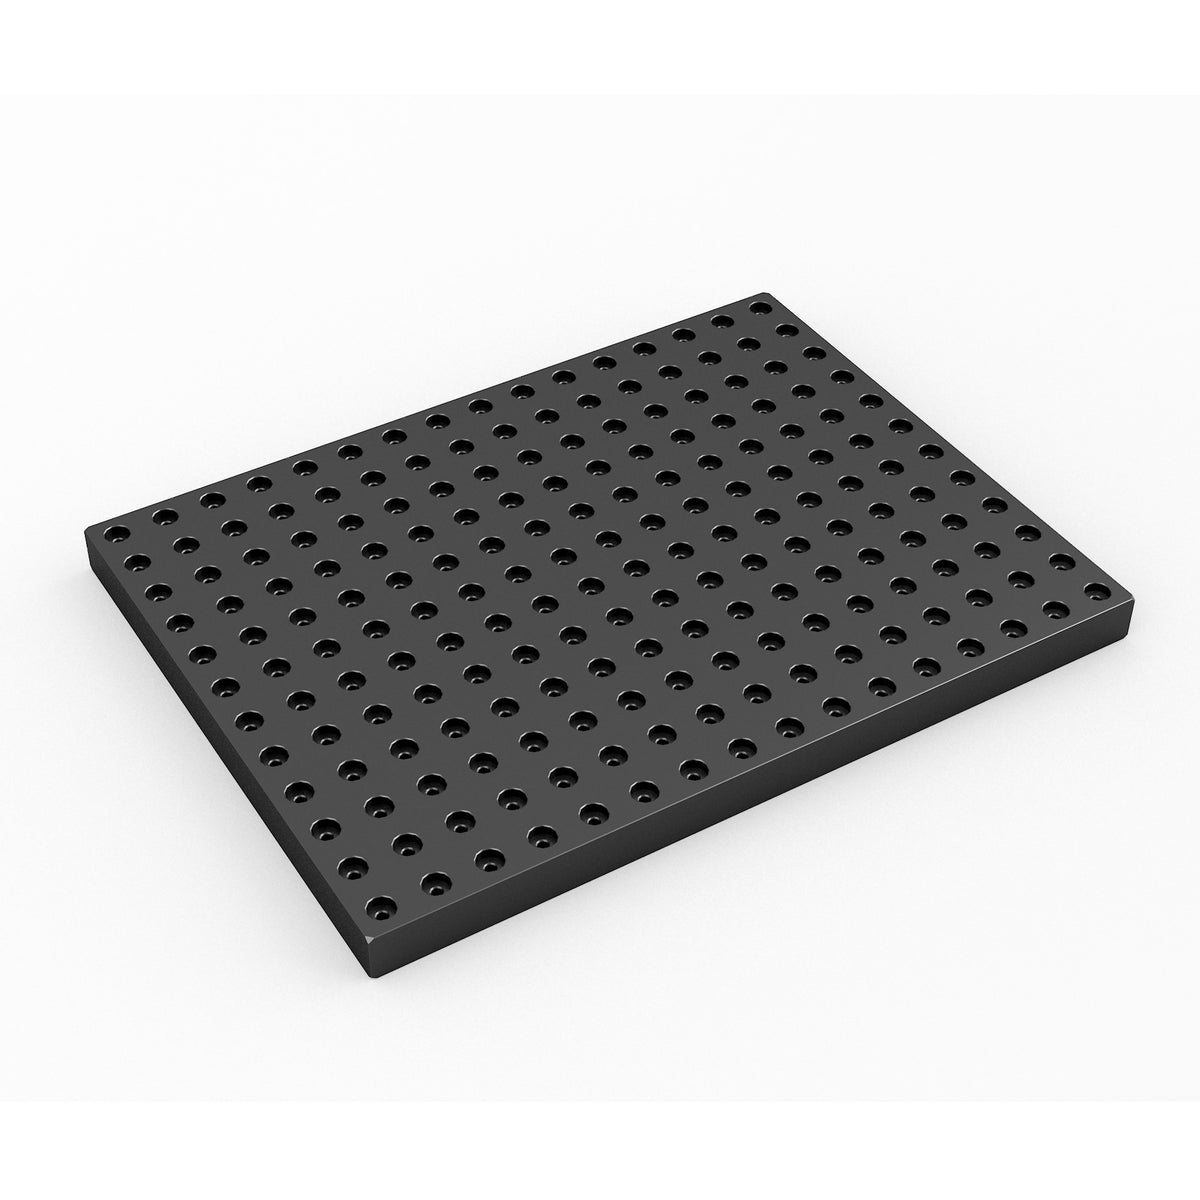 CMM Fixture Grid base plate 25x900x1200mm